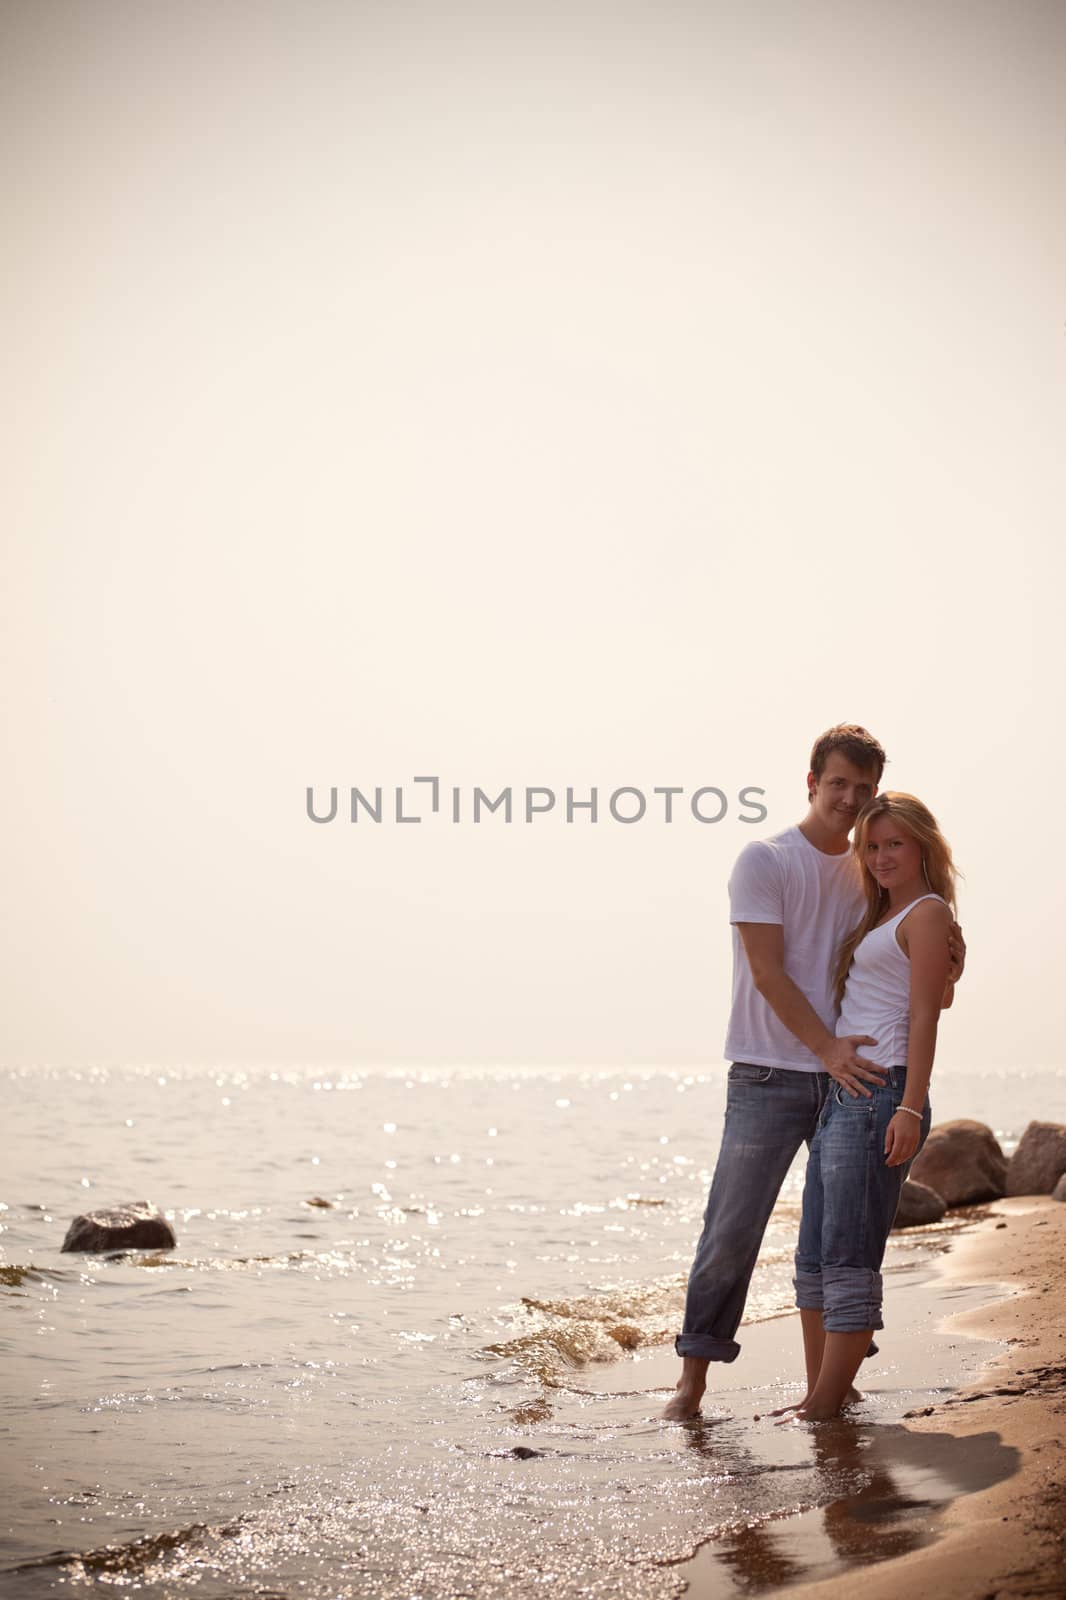 beautiful couple on a seashore, toned